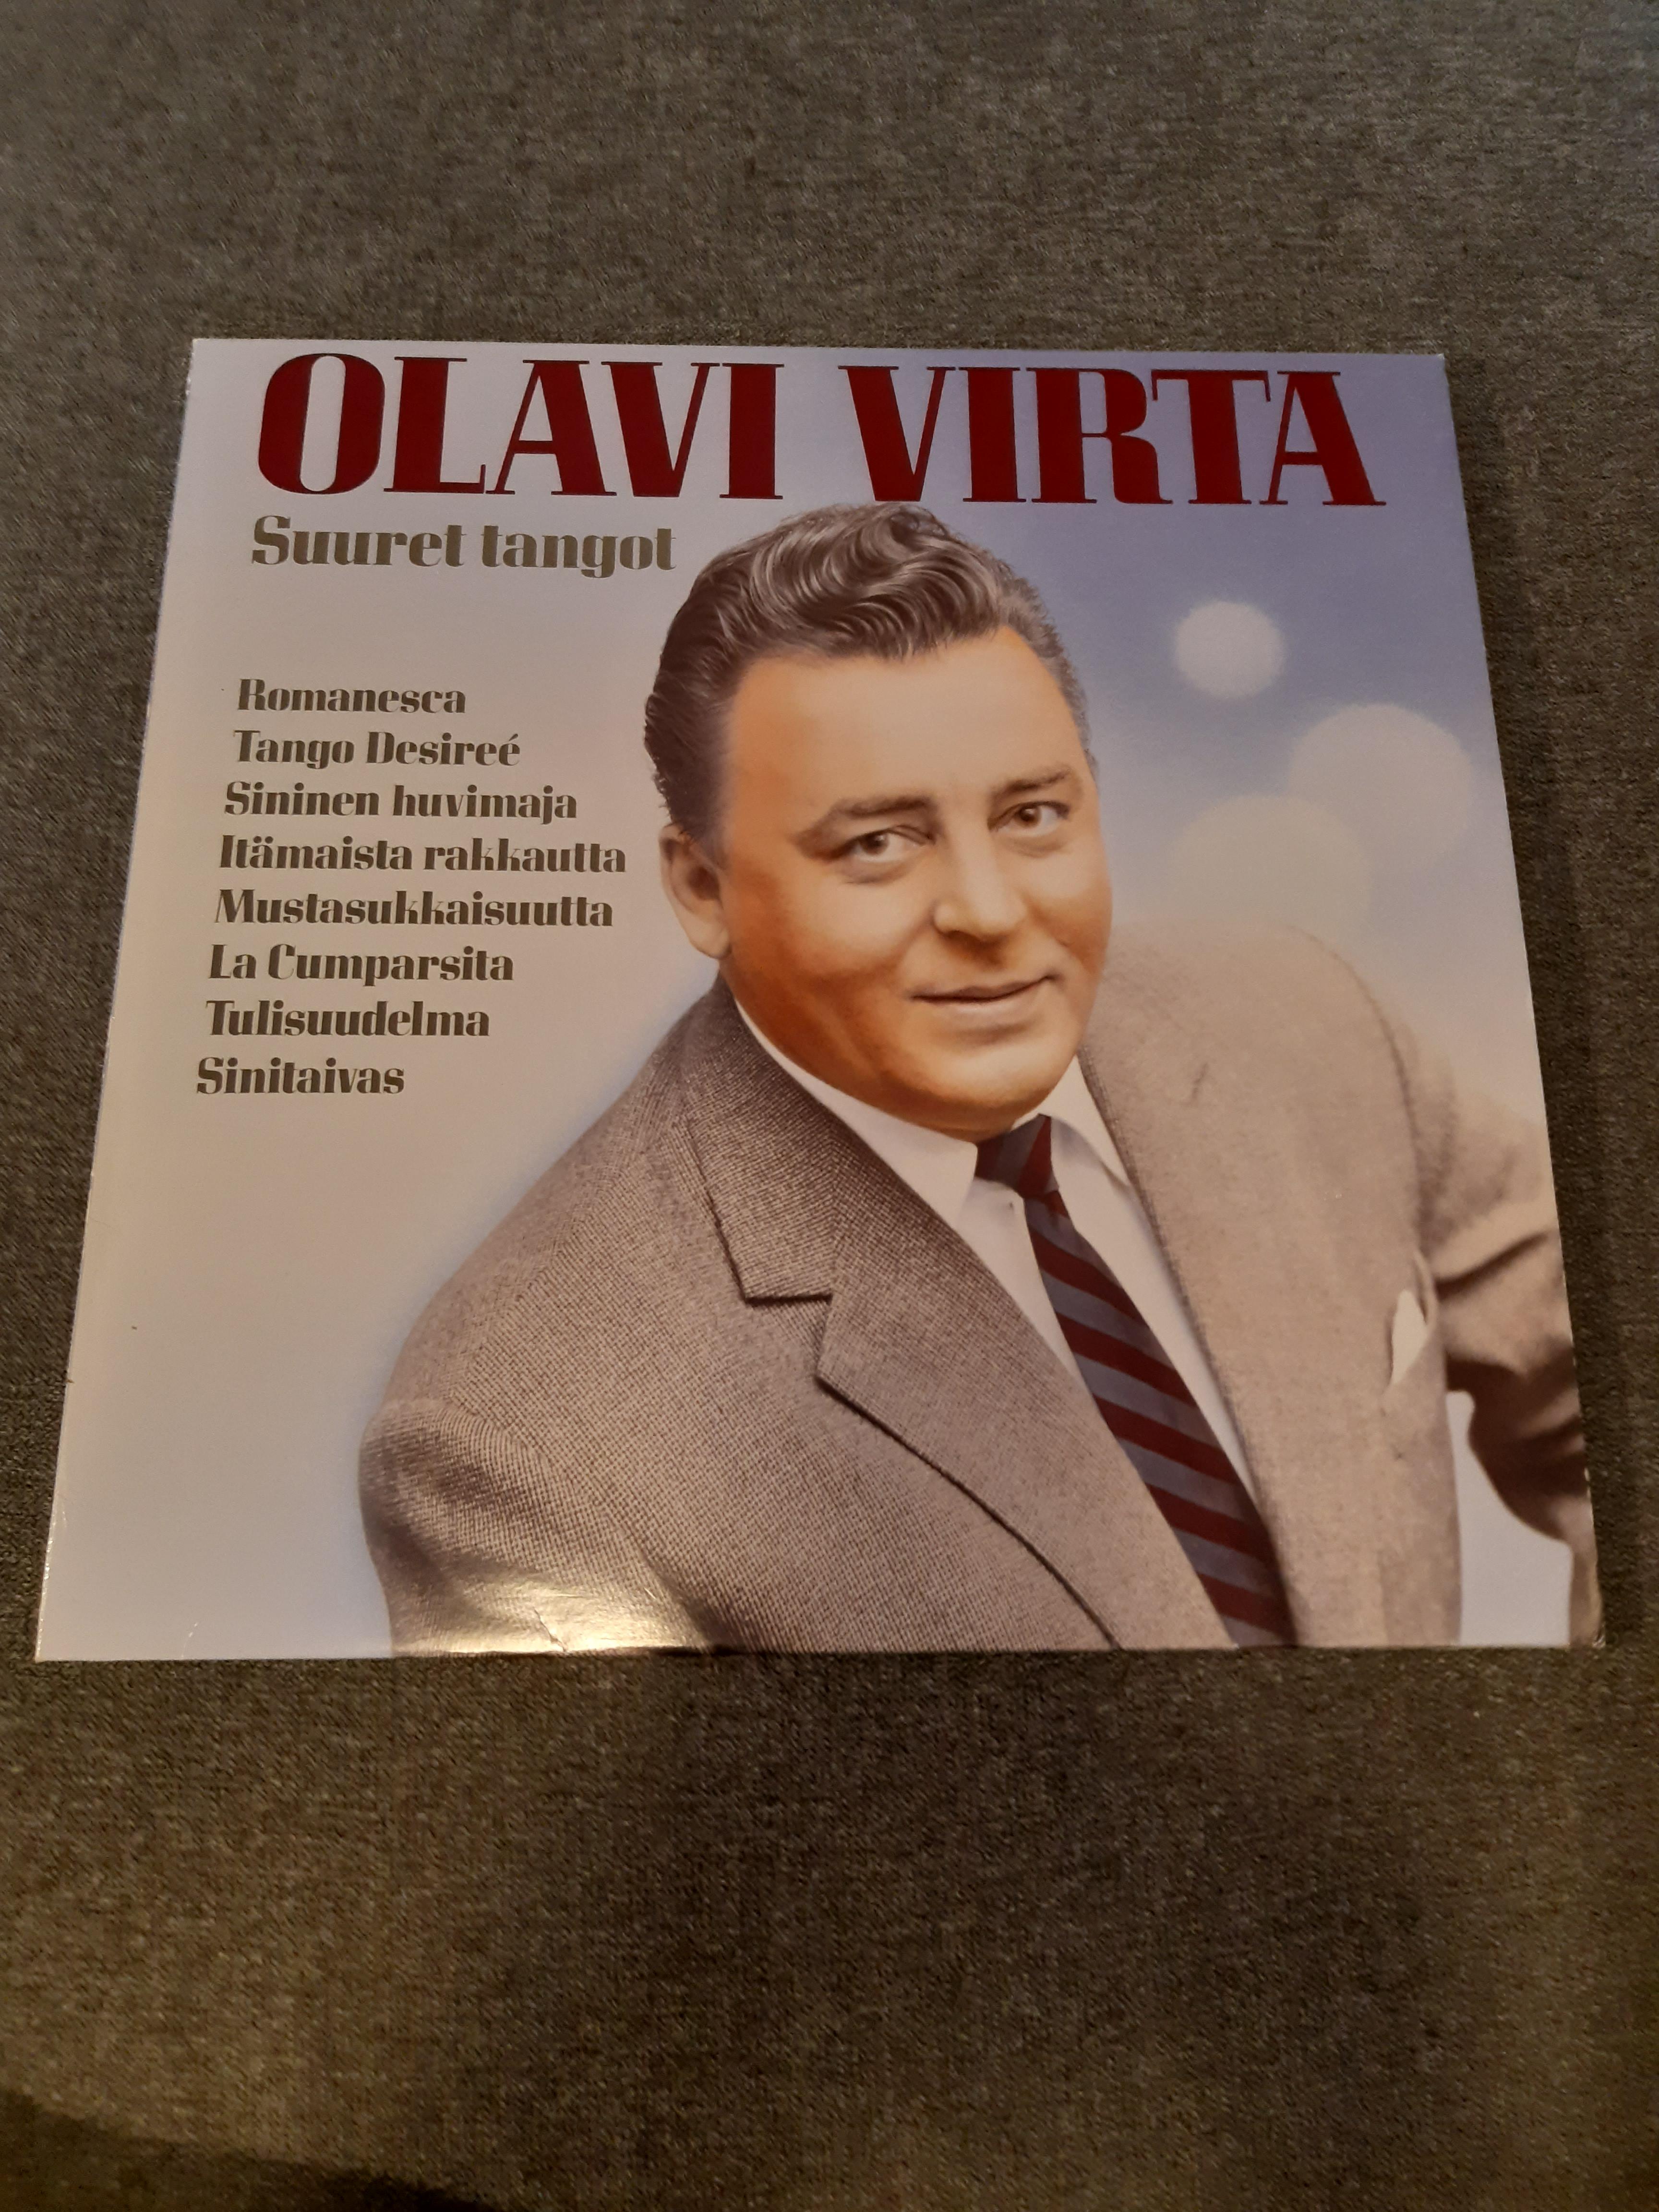 Olavi Virta - Suuret tangot - LP (käytetty)